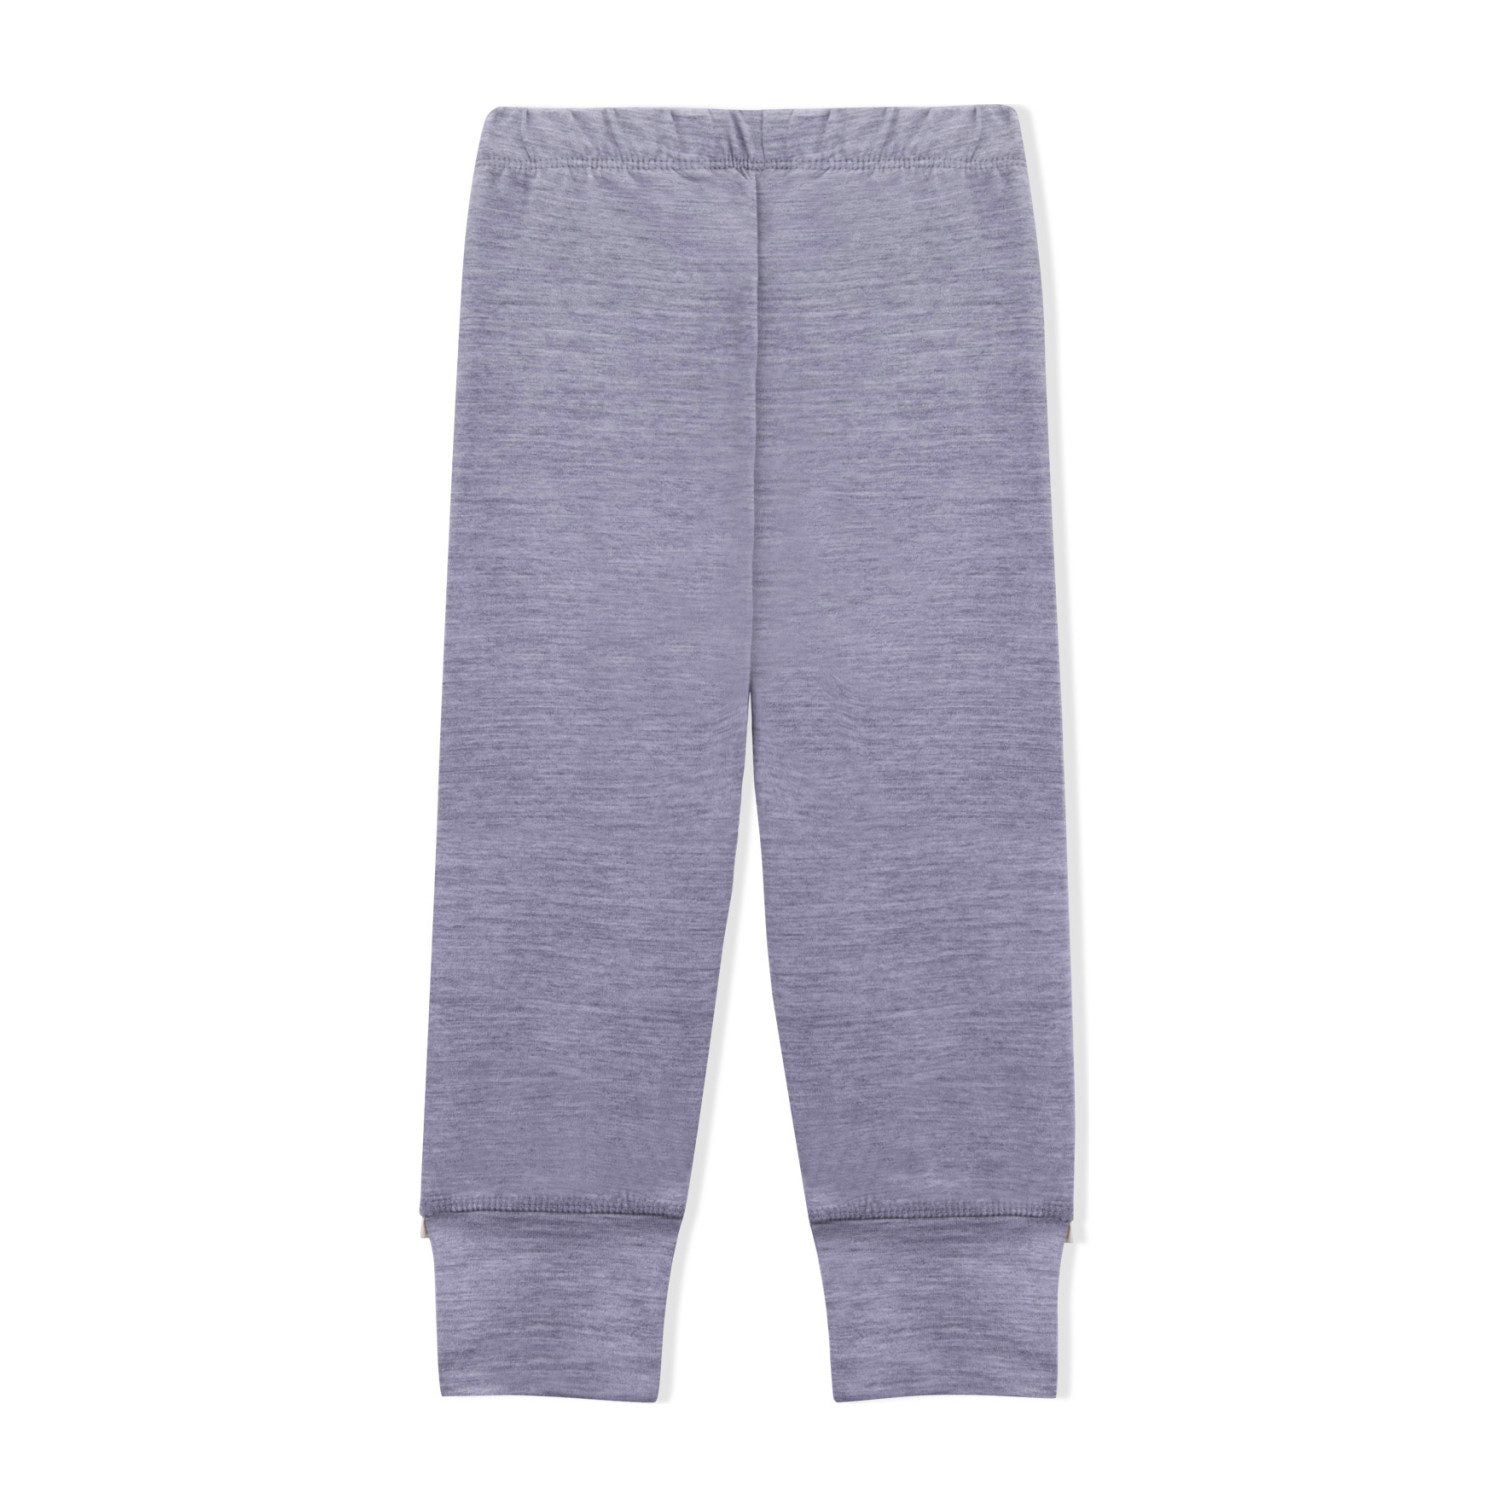 Essential Merino Lounge Pants - Knot x Antipodes Merino (Grey)